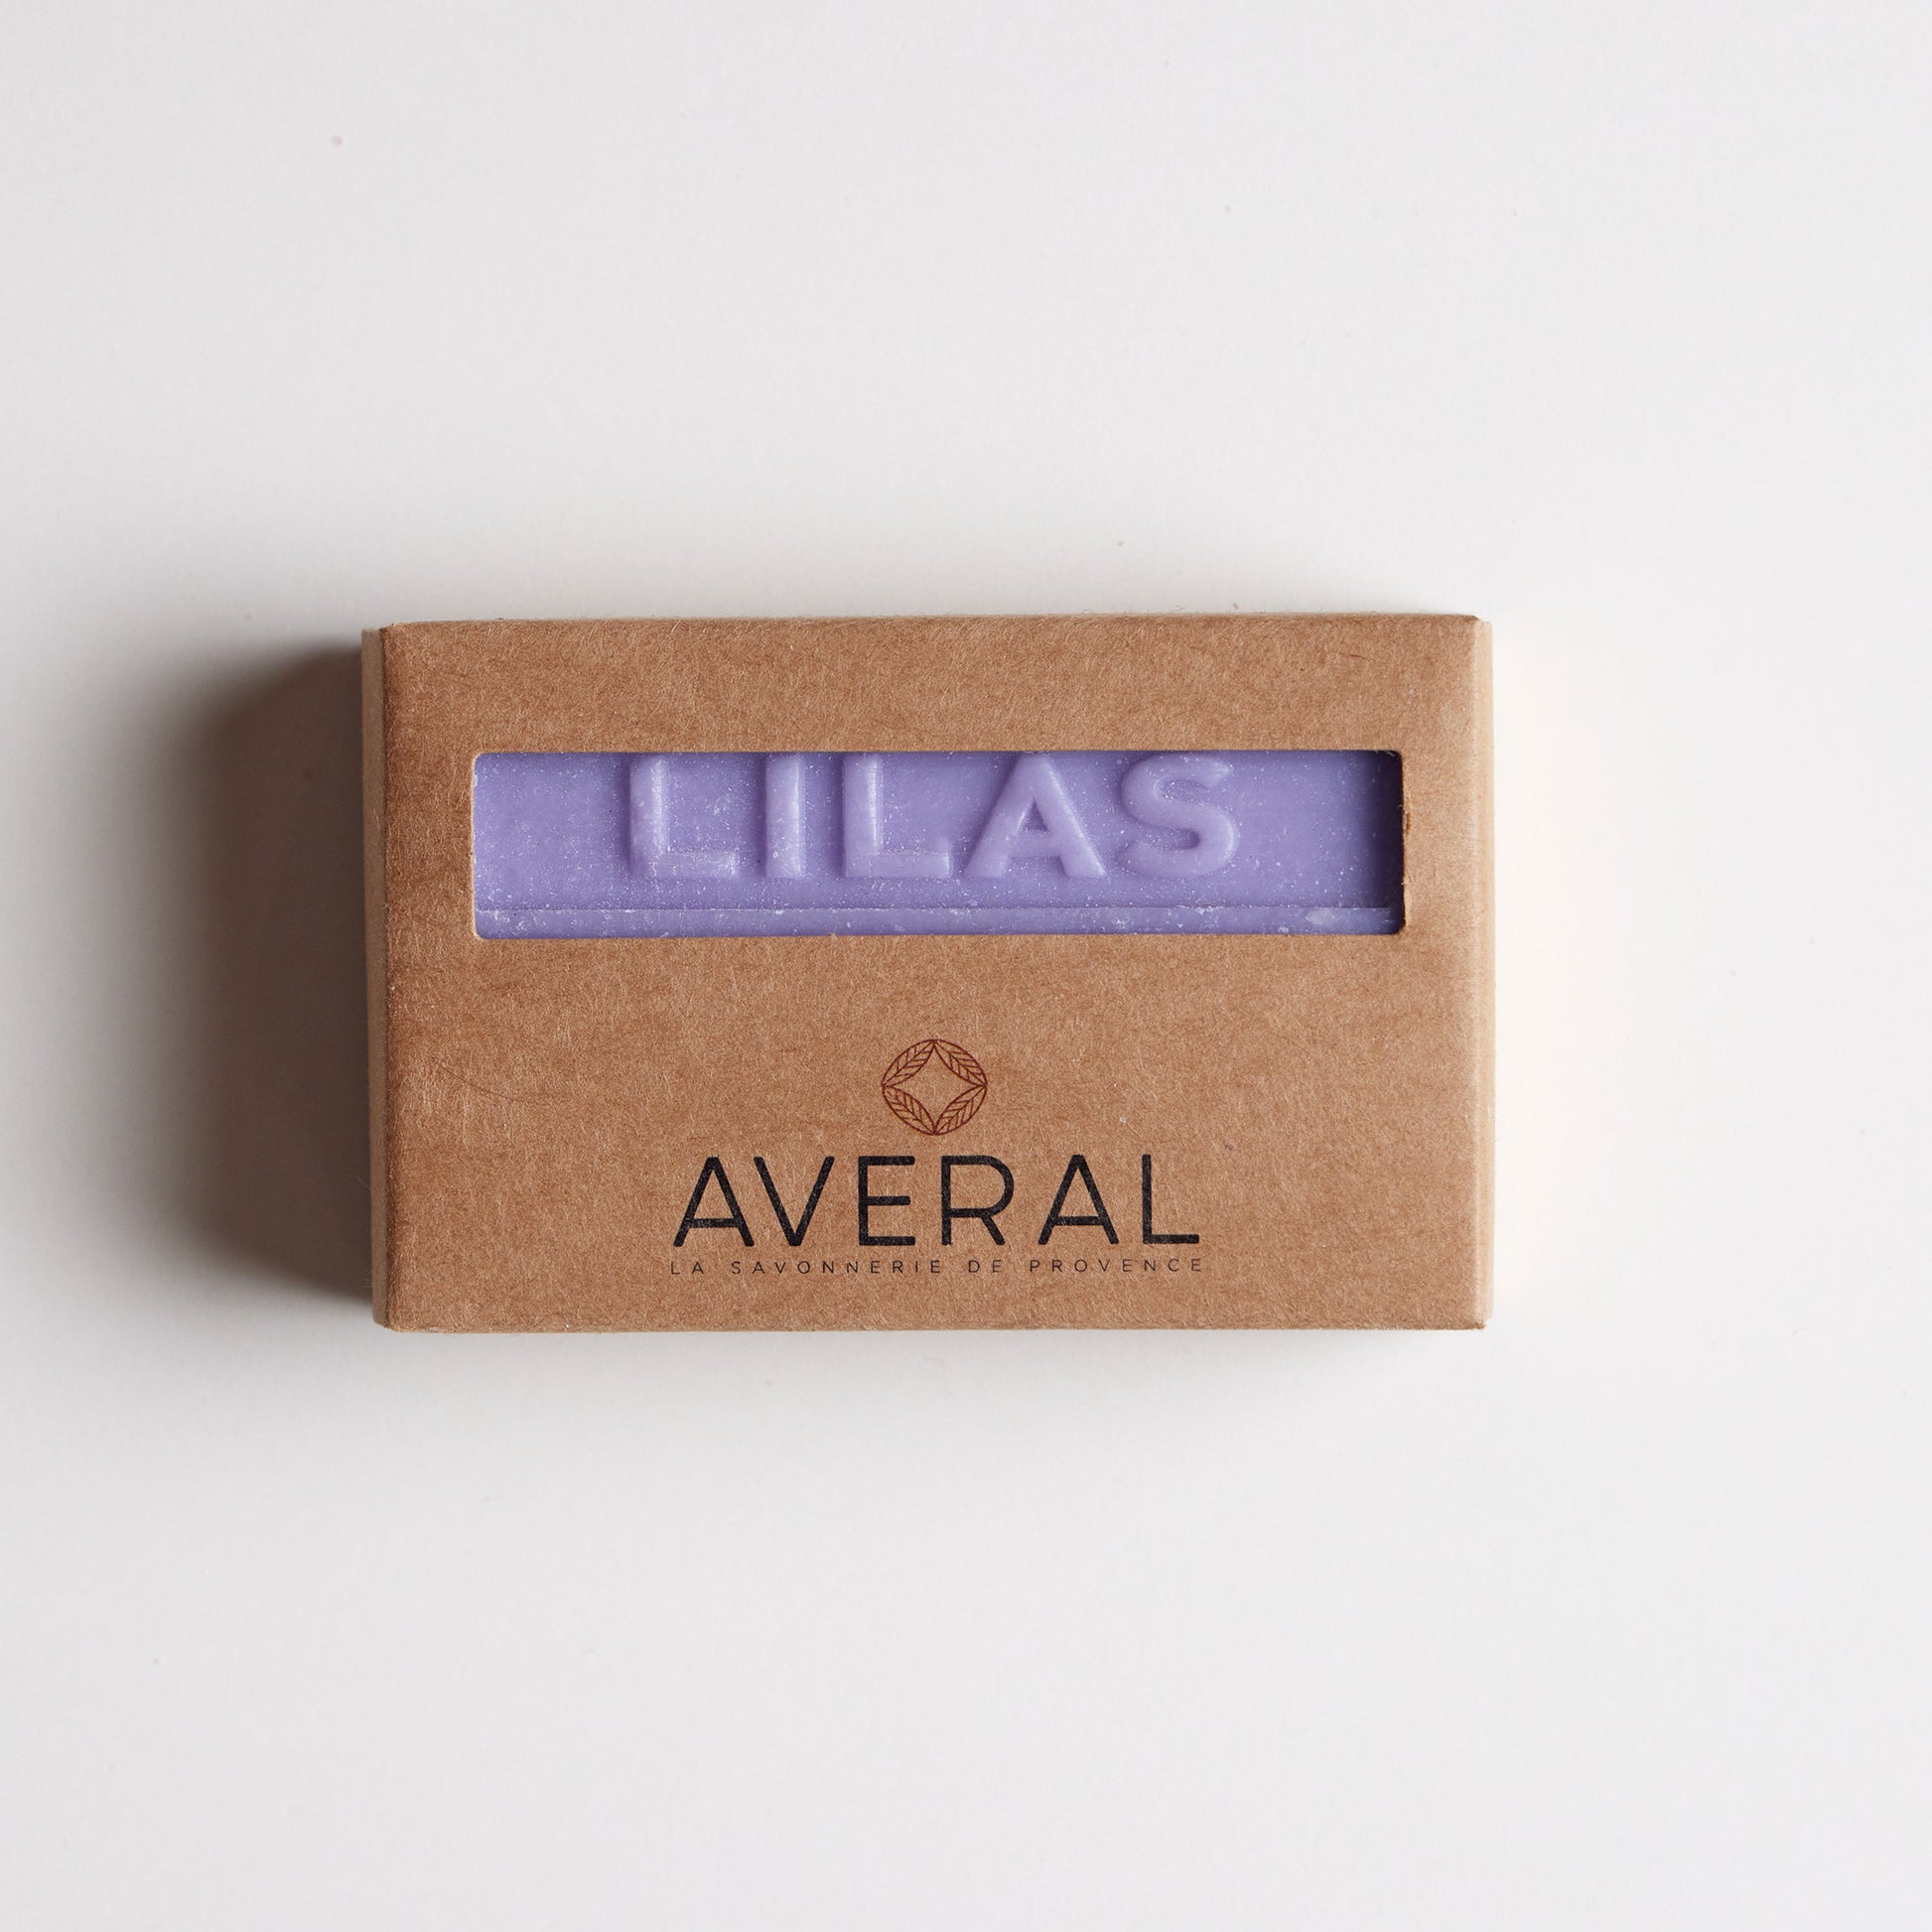 Lilas bar soap